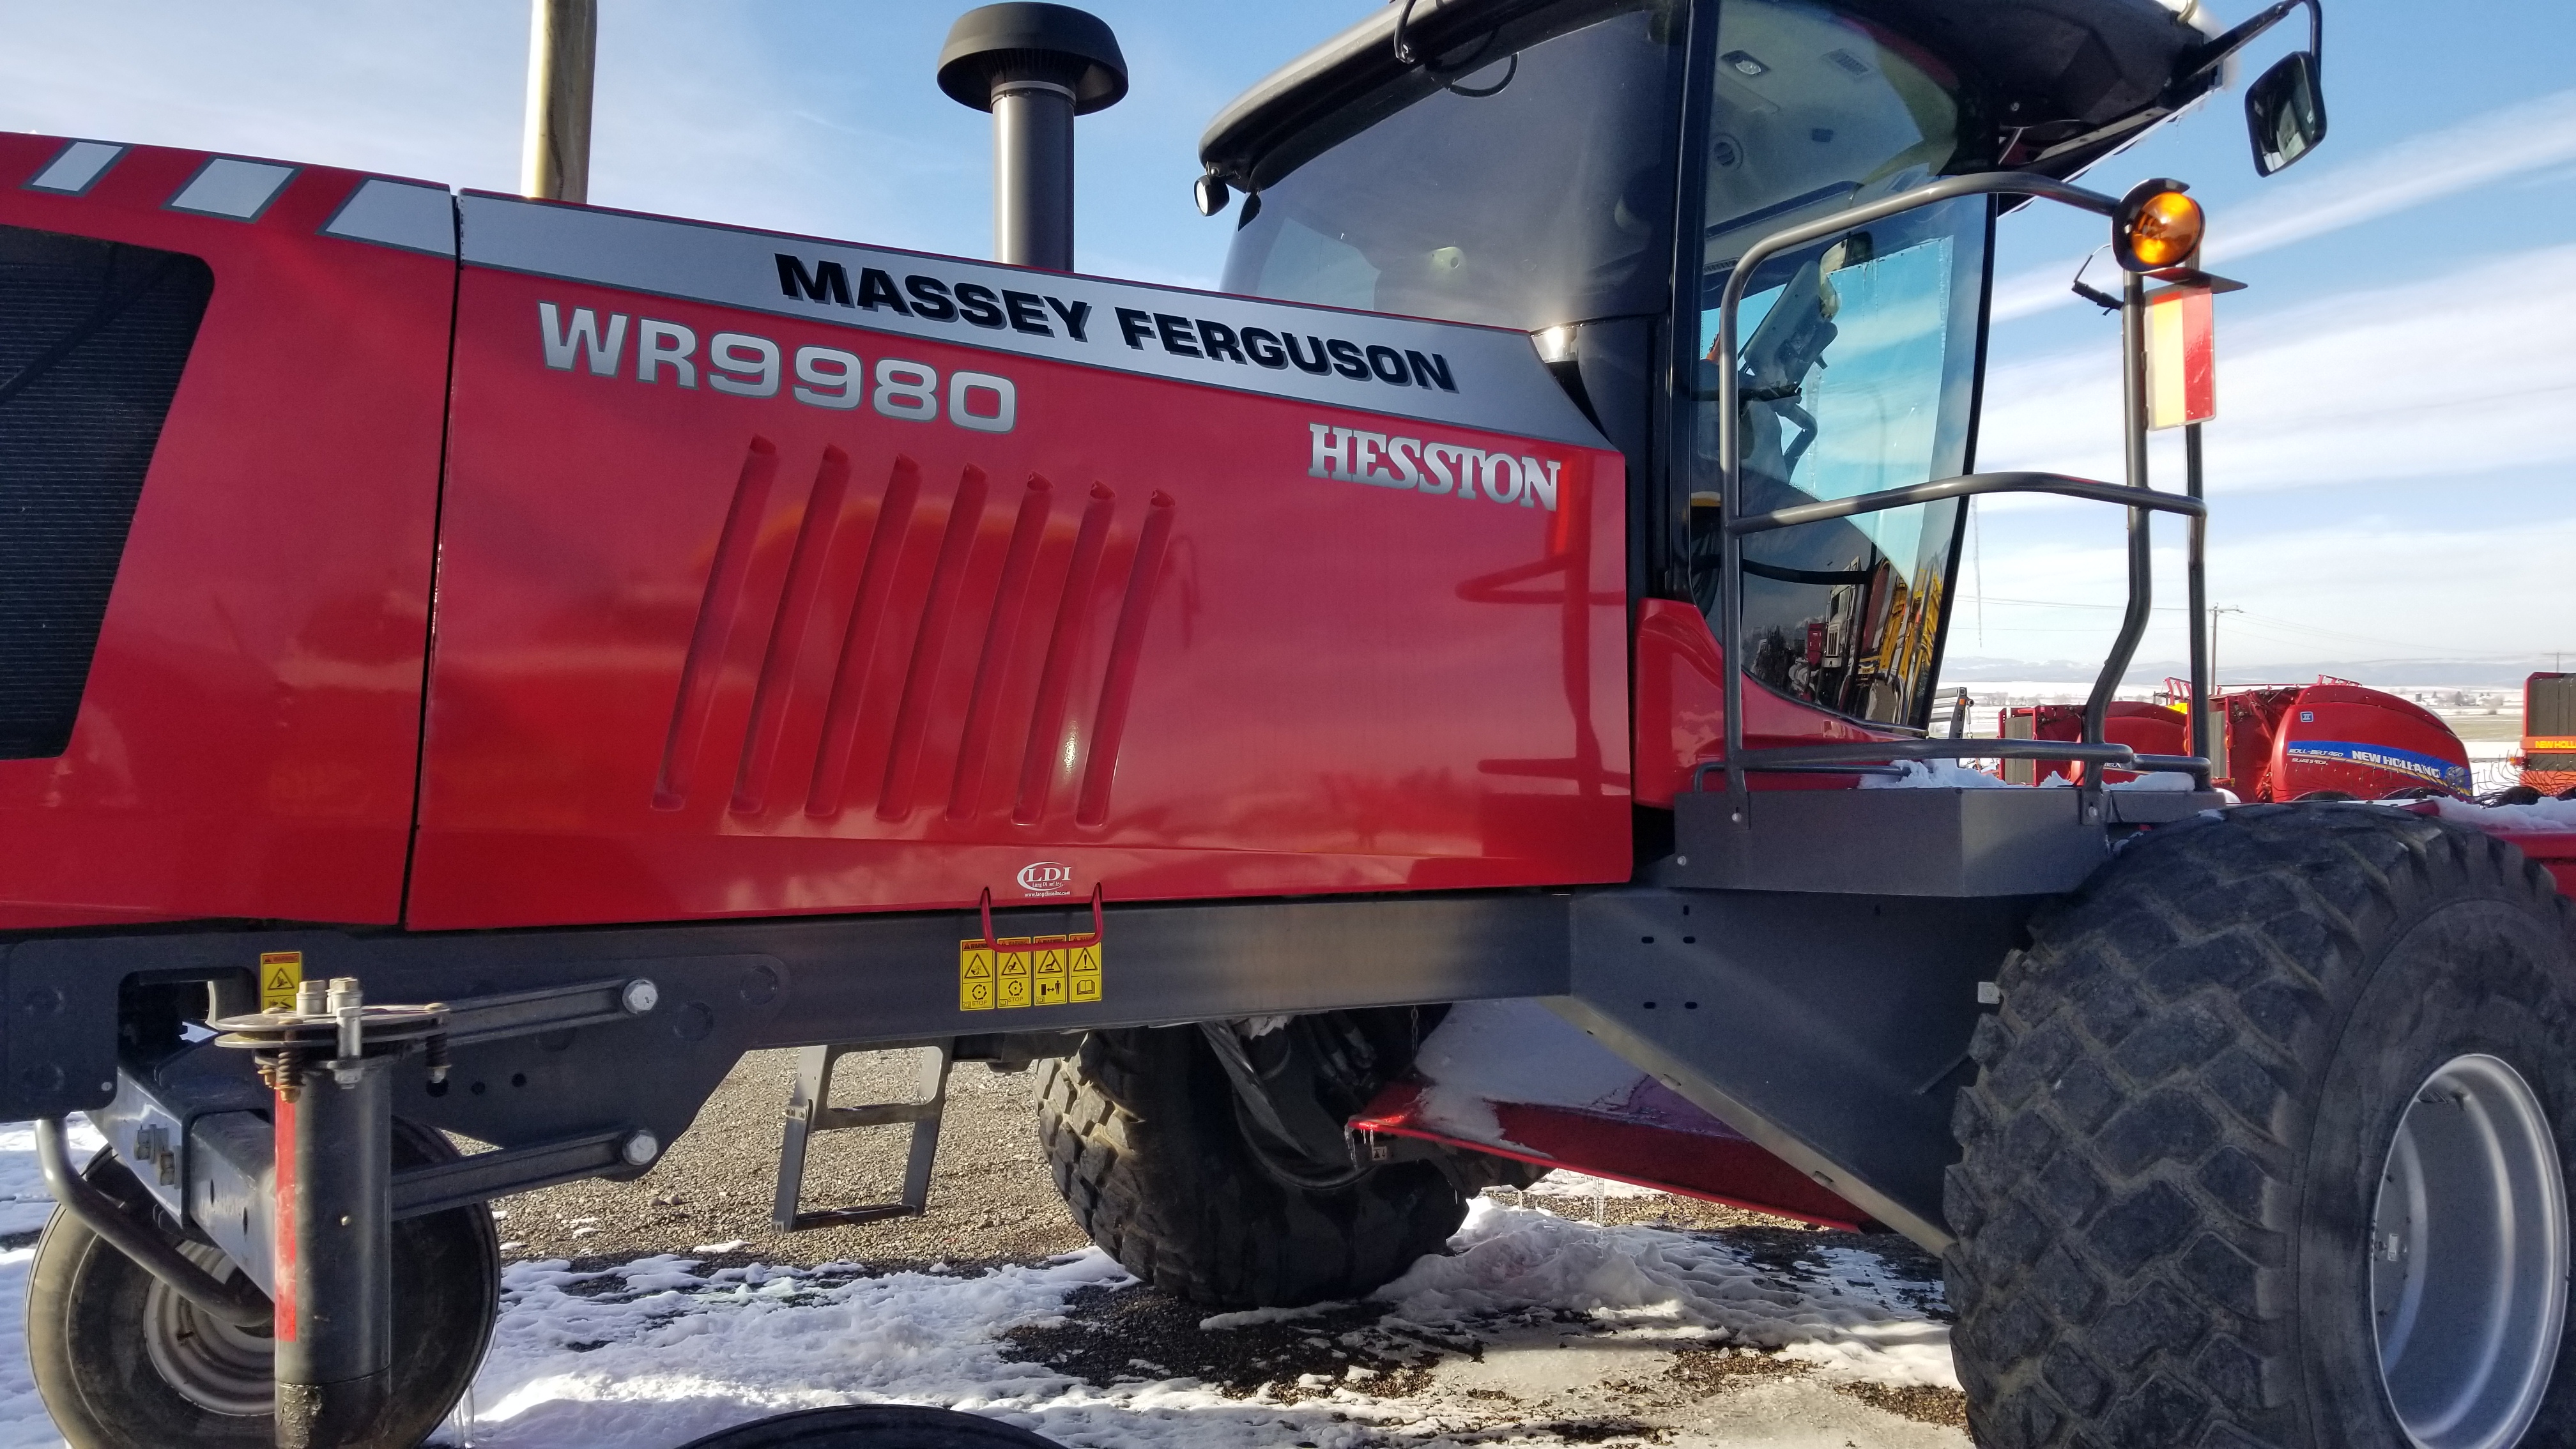 2019 Massey Ferguson WR9980 Windrower